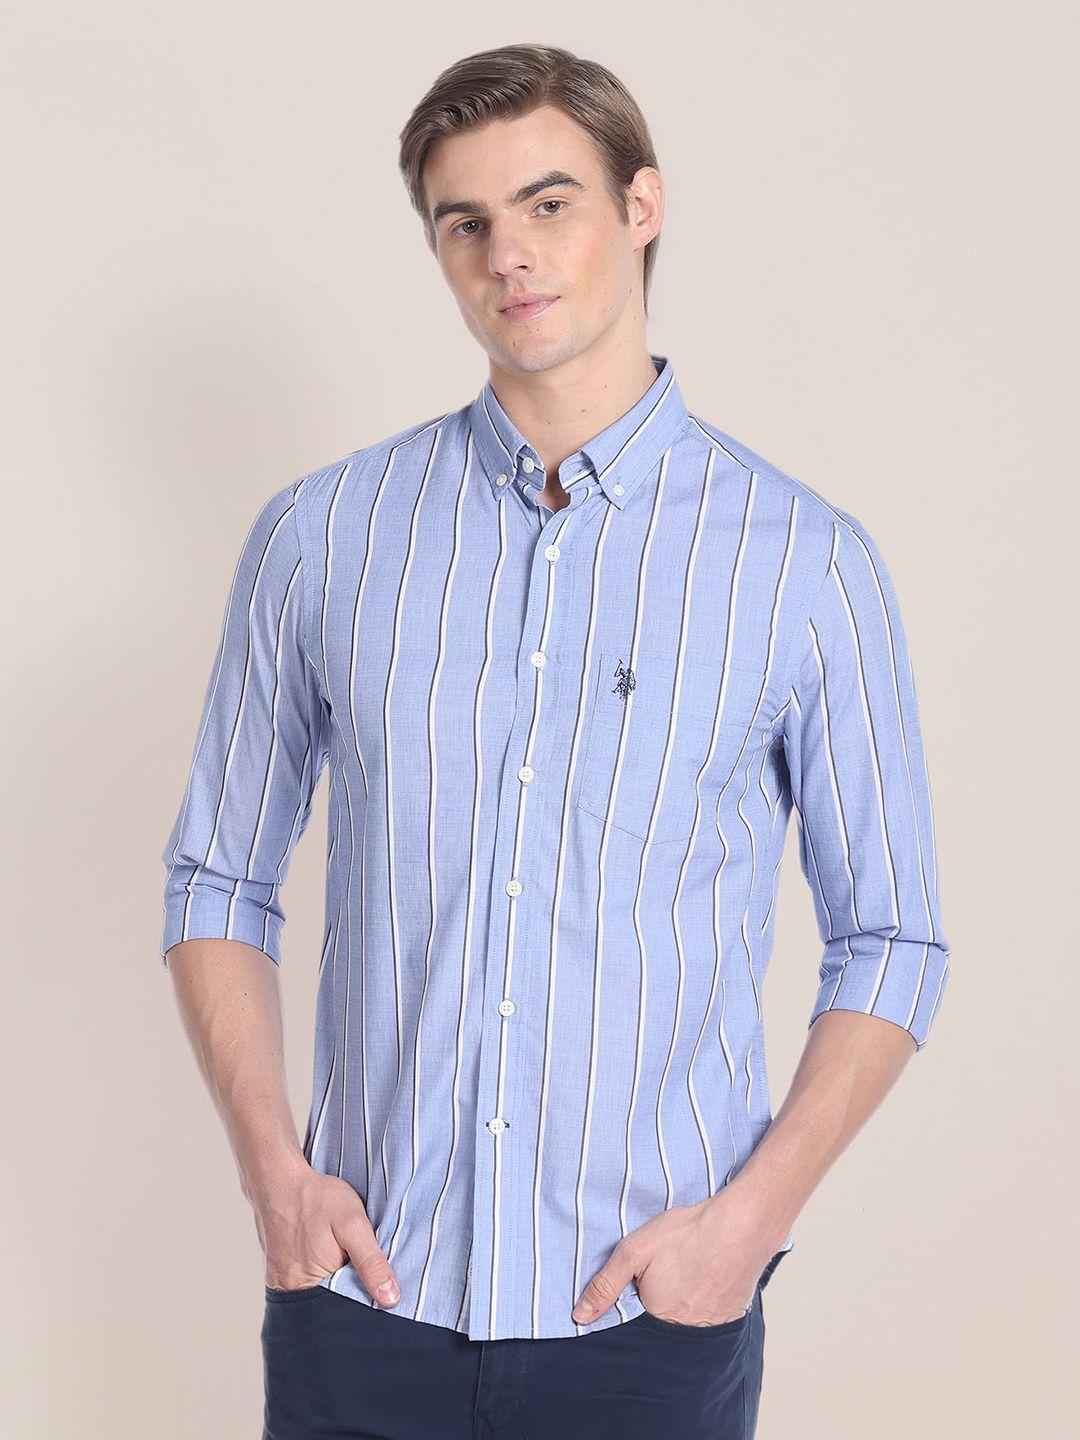 u.s. polo assn. vertical striped pure cotton casual shirt